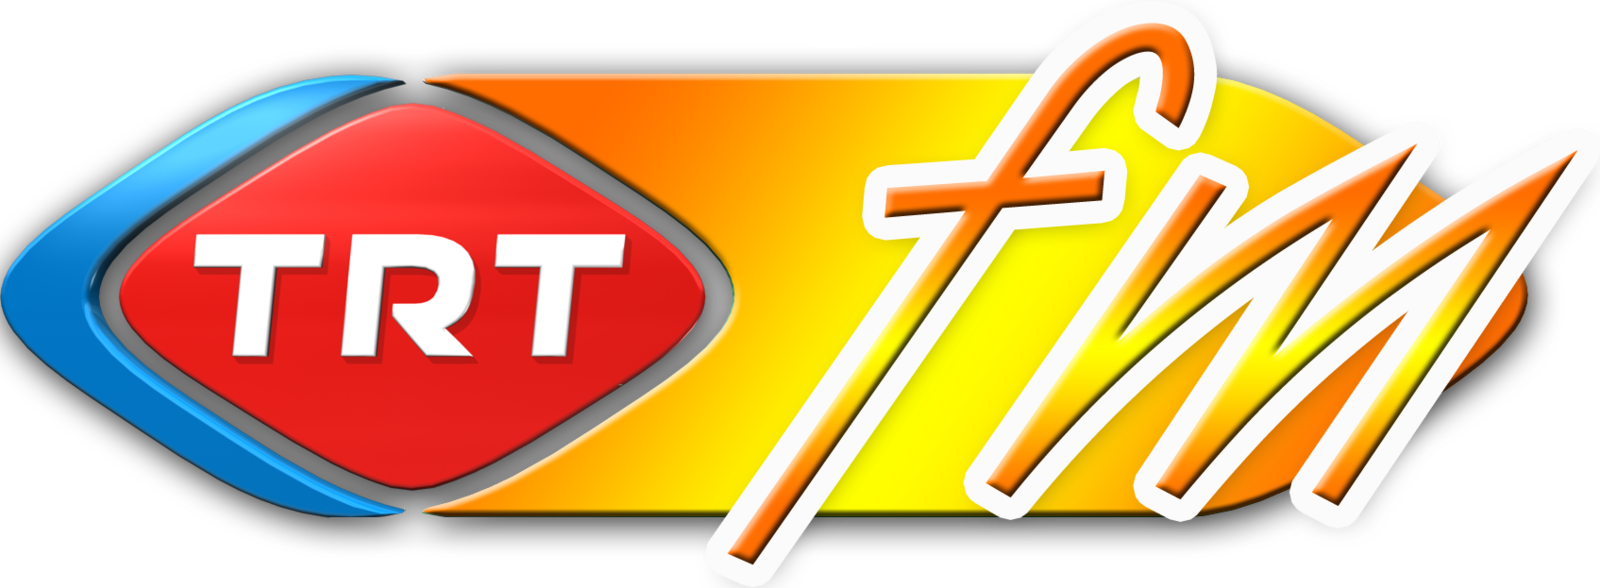 ТРТ. Fm логотип. TRT лого. Изображение fm.